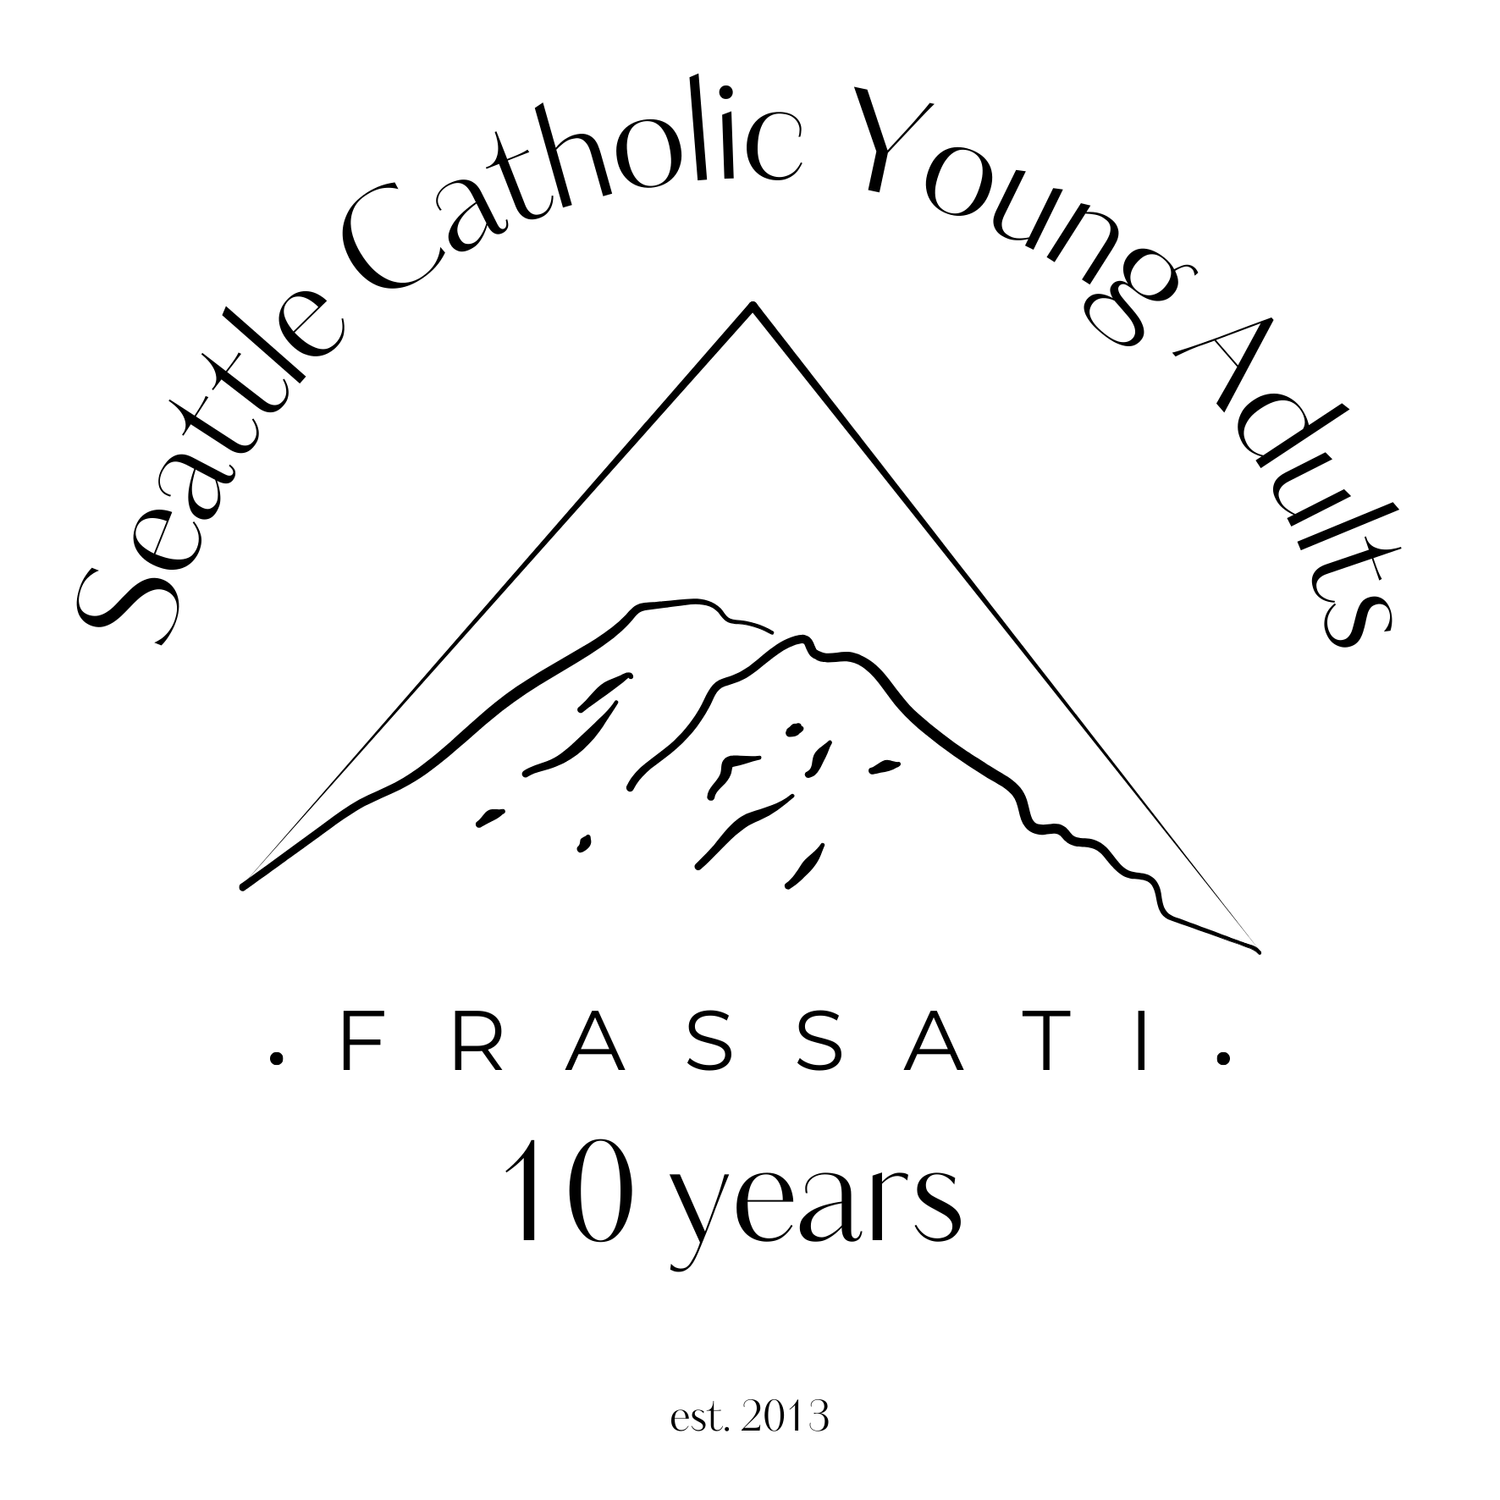 Frassati: Seattle Catholic Young Adults